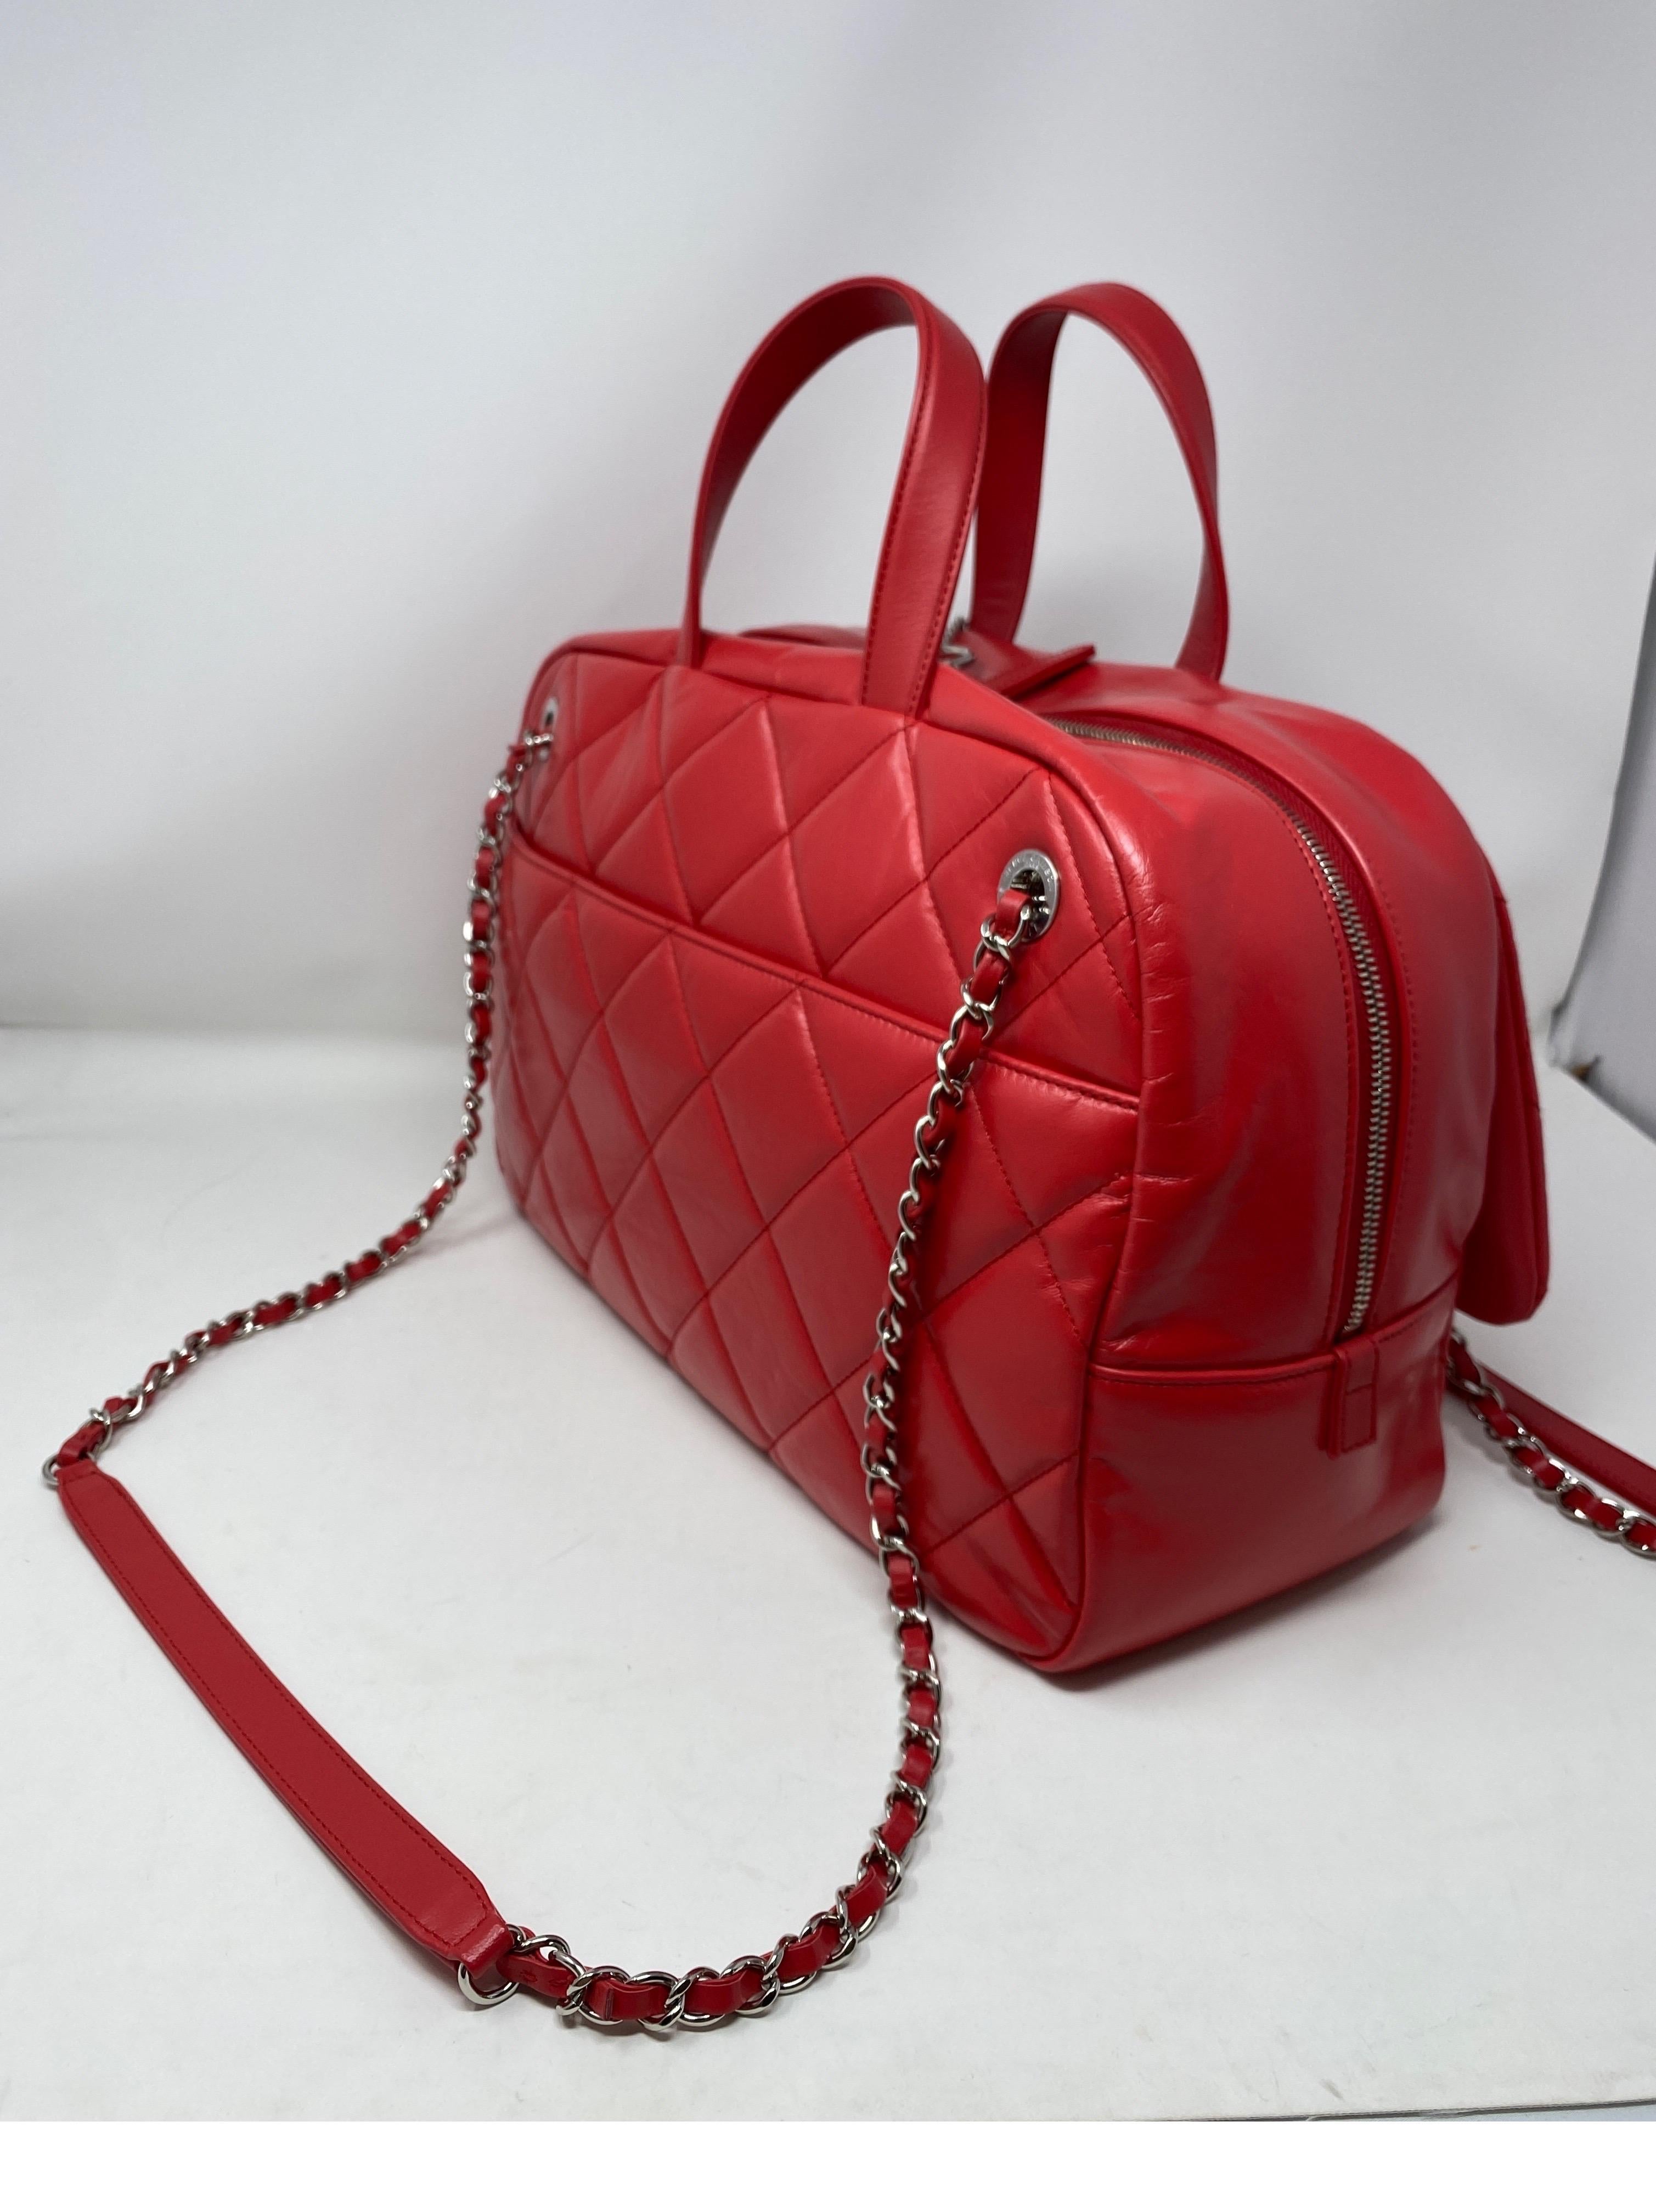 Chanel Large Red Bowler Bag  1